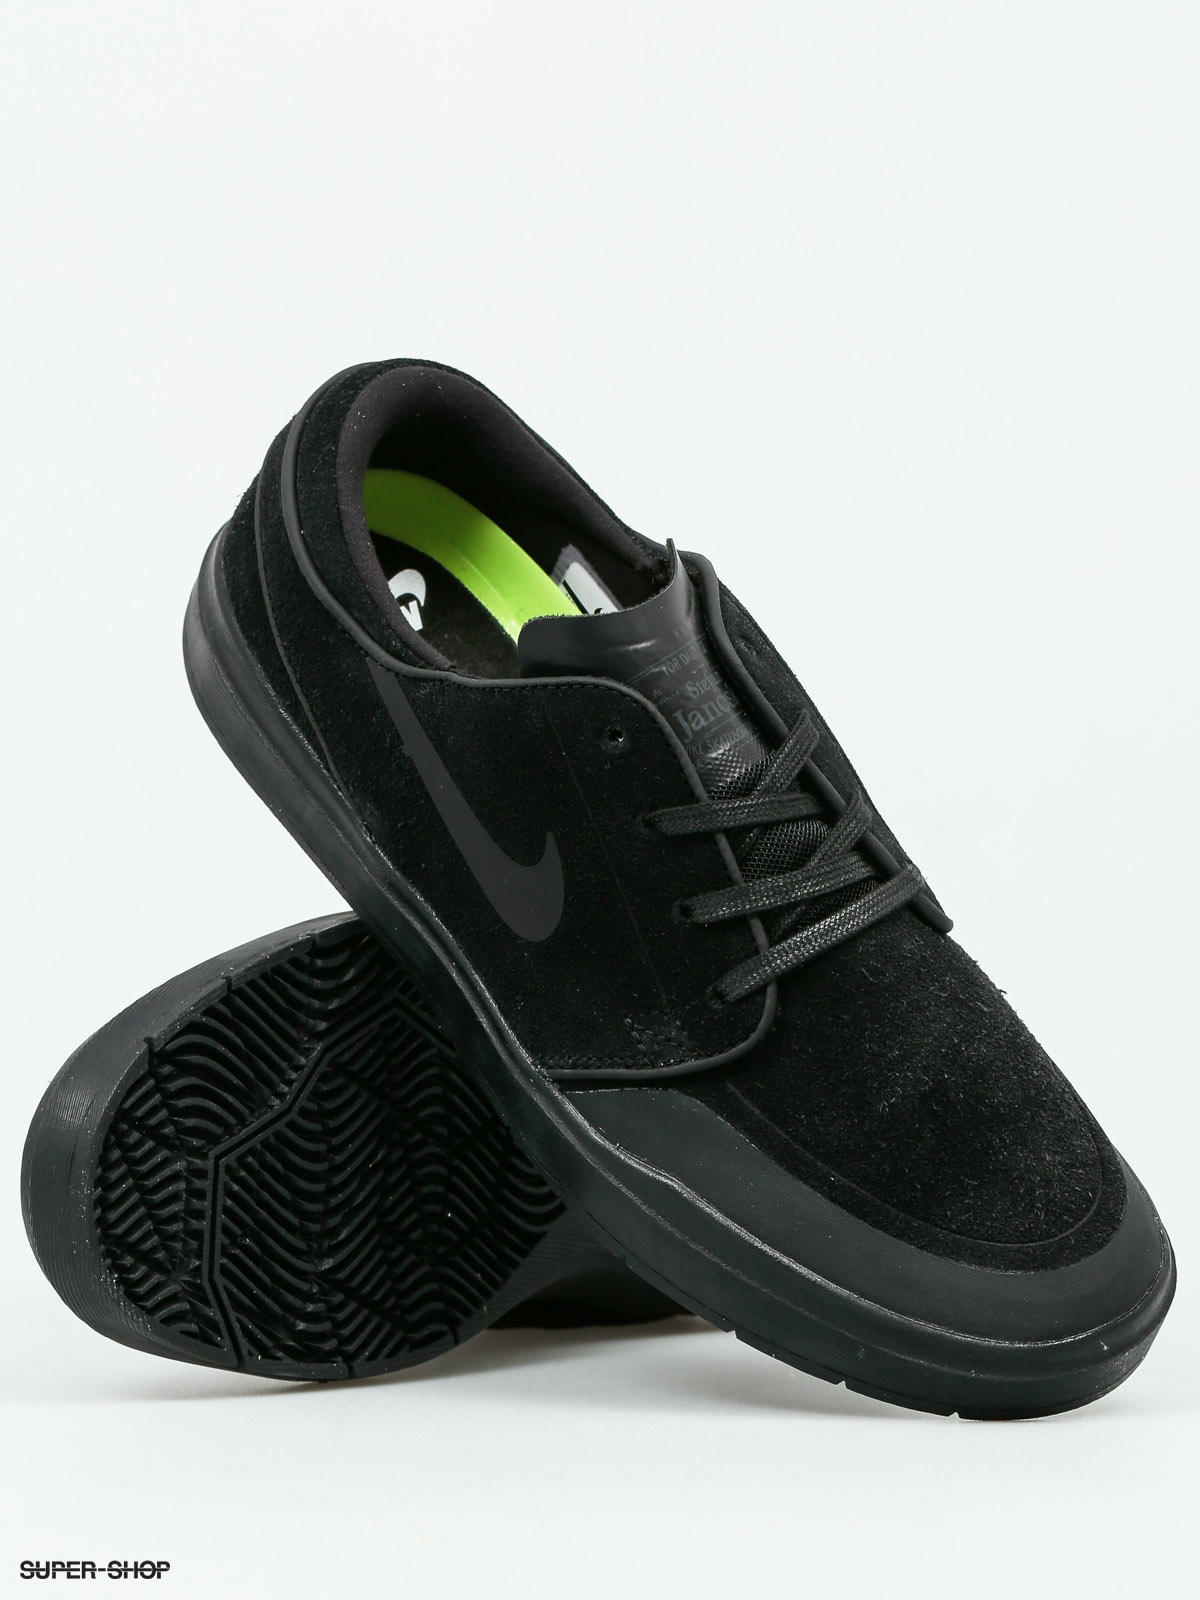 Veronderstelling Allergisch hoesten Nike SB Shoes Stefan Janoski Hyperfeel Xt (black/black anthracite white)